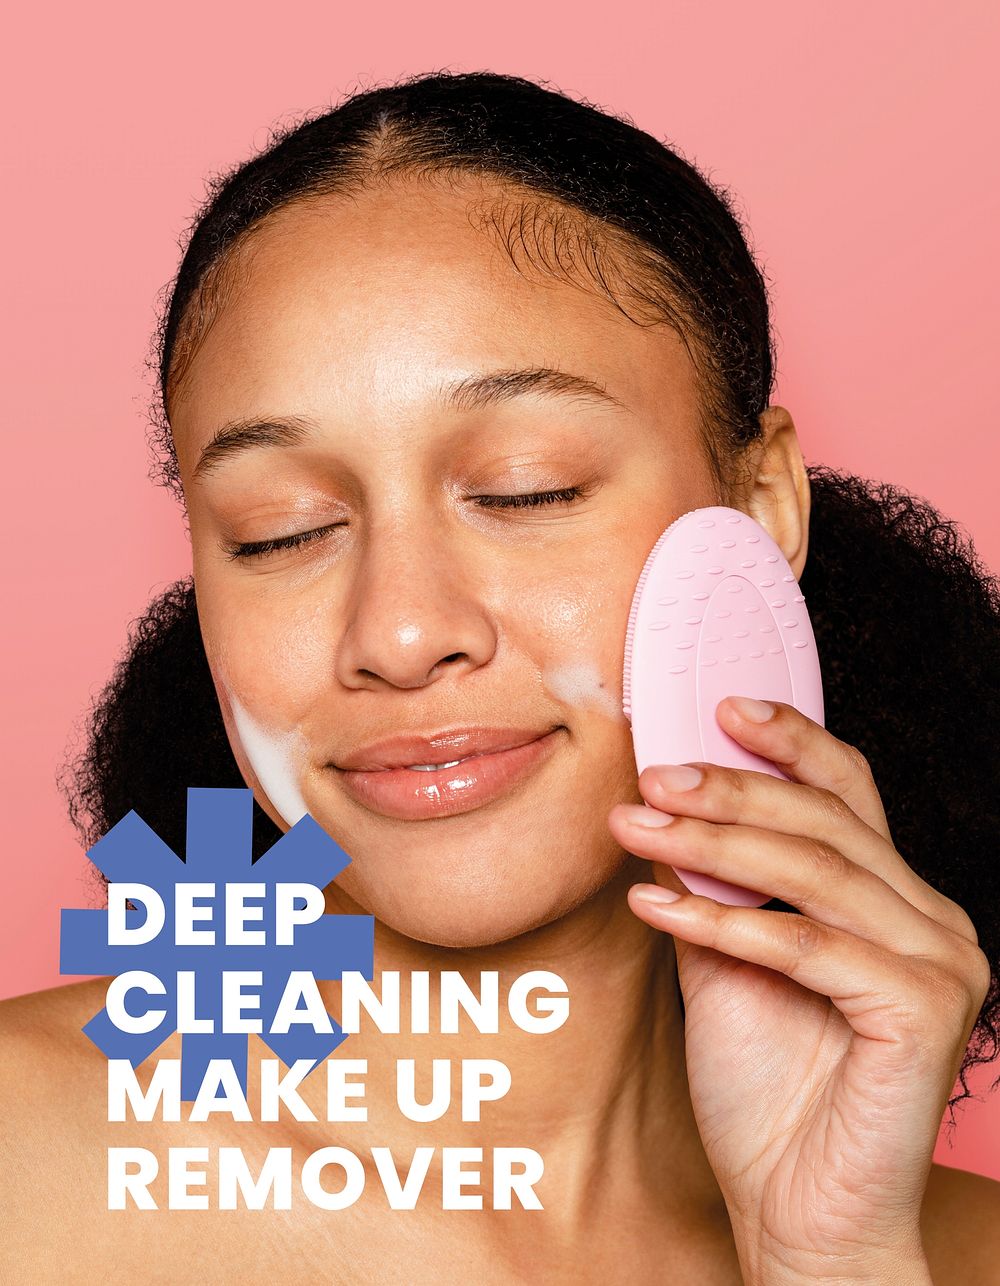 Deep cleansing flyer editable template, beauty ad psd